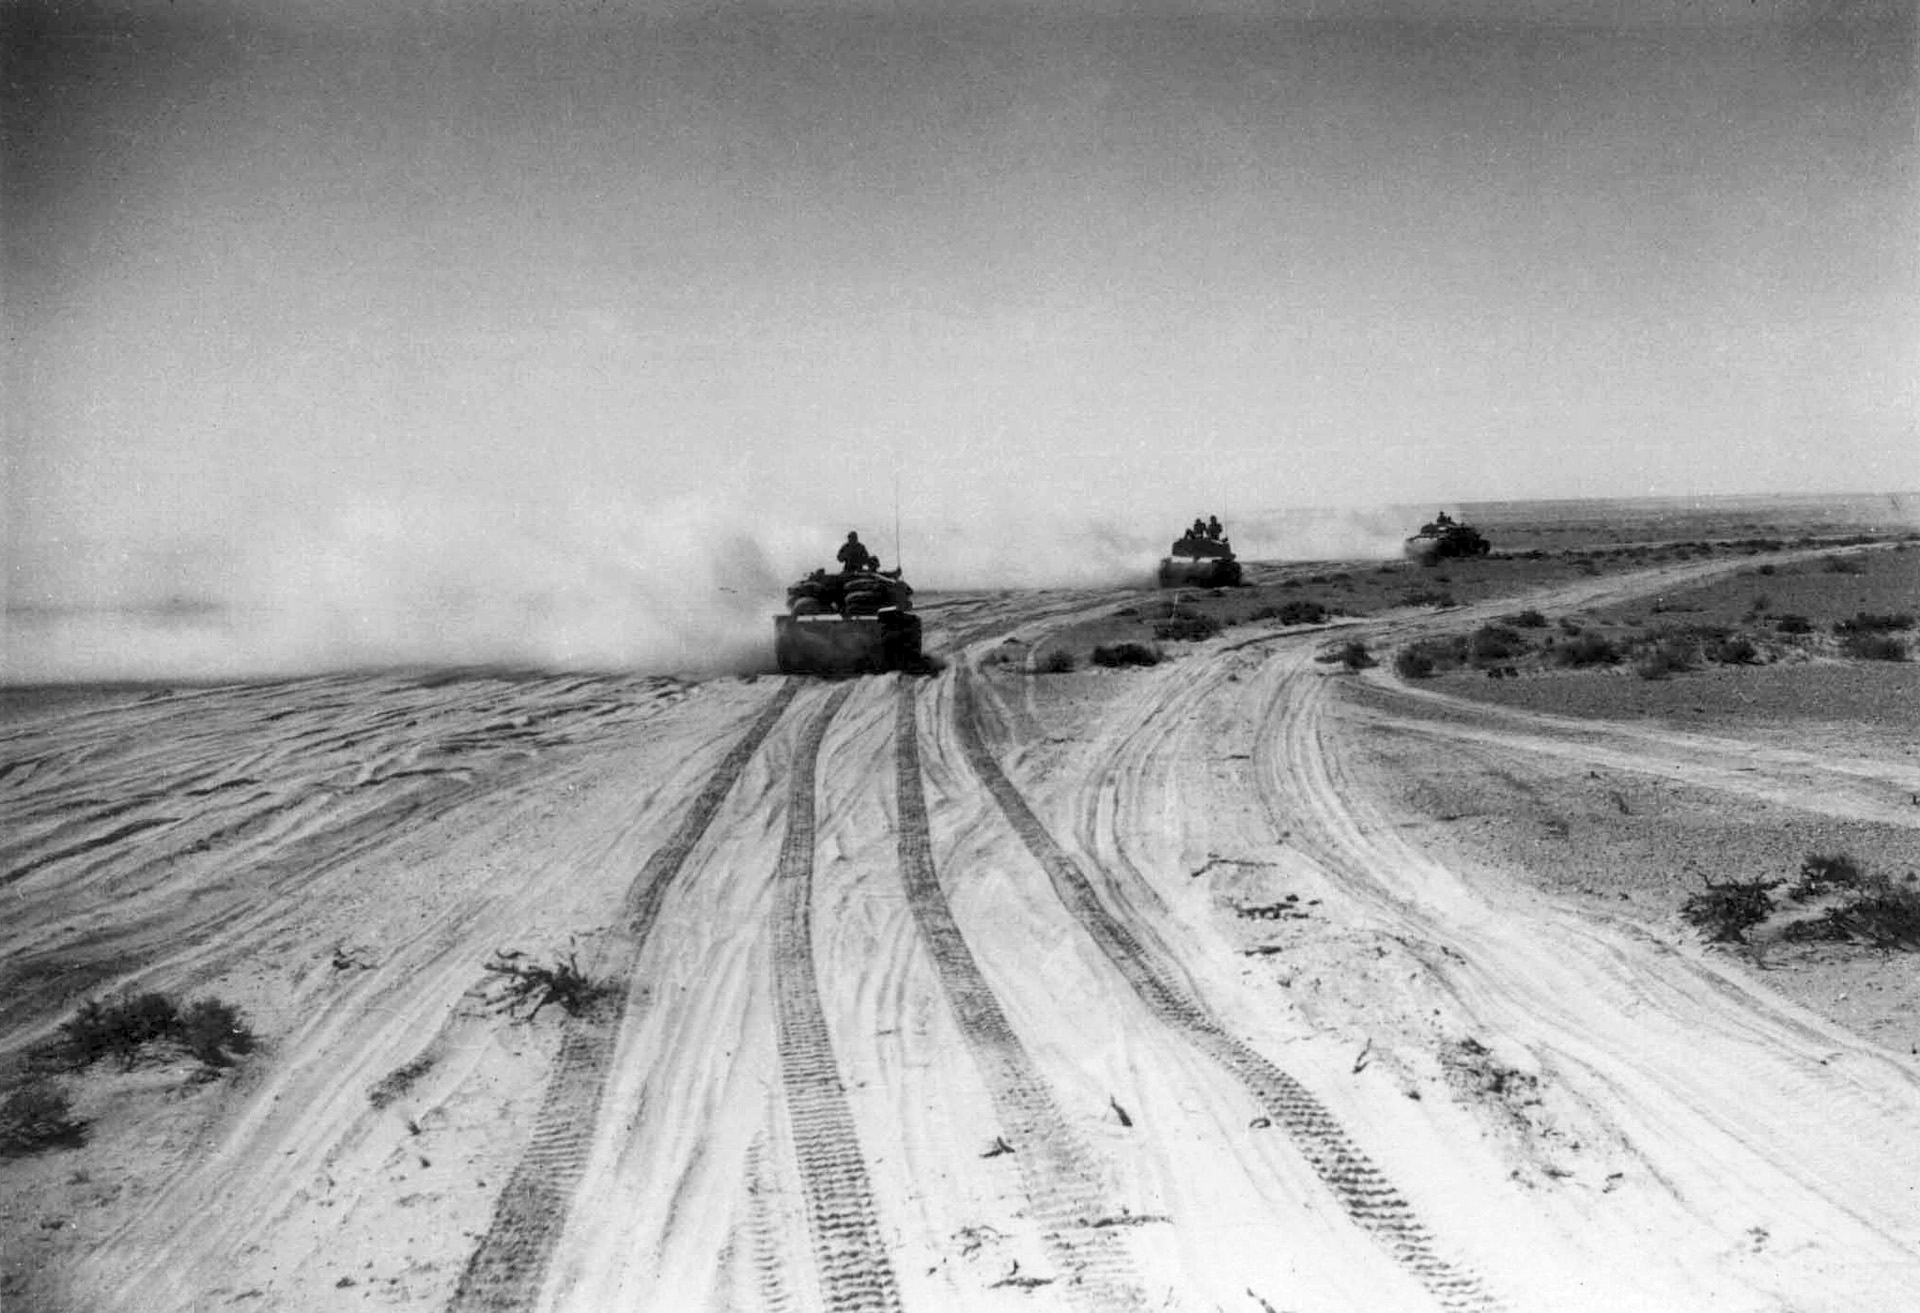  Italian Semovente self-propelled guns rumble forward during the initial Axis advance. 